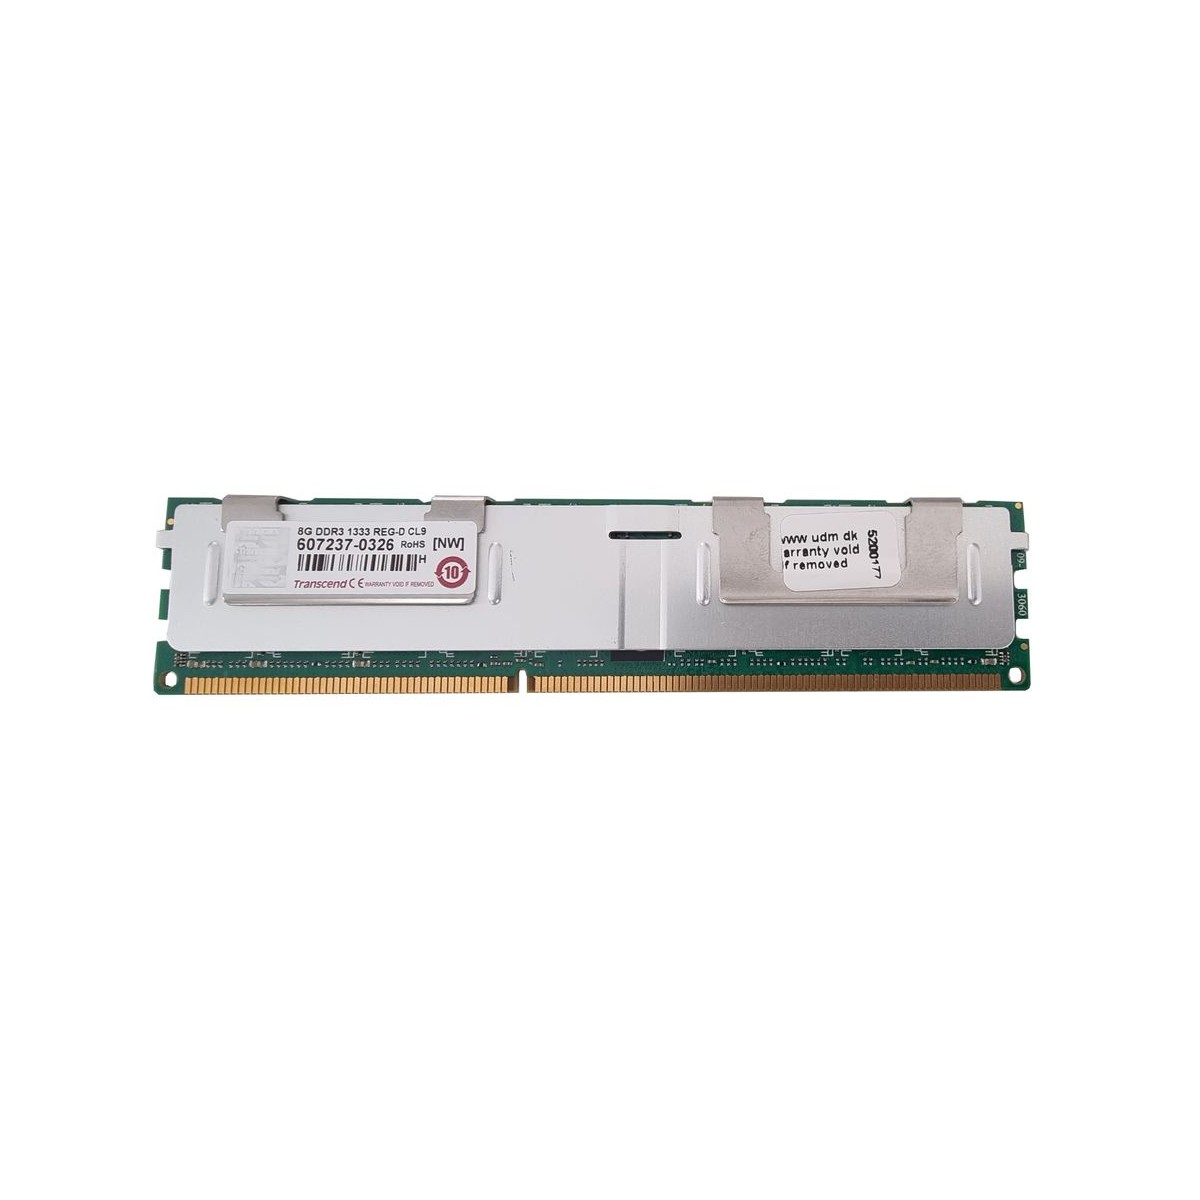 TRANSCEND 8GB DDR3 1333MHz ECC REG CL9 607237-0326